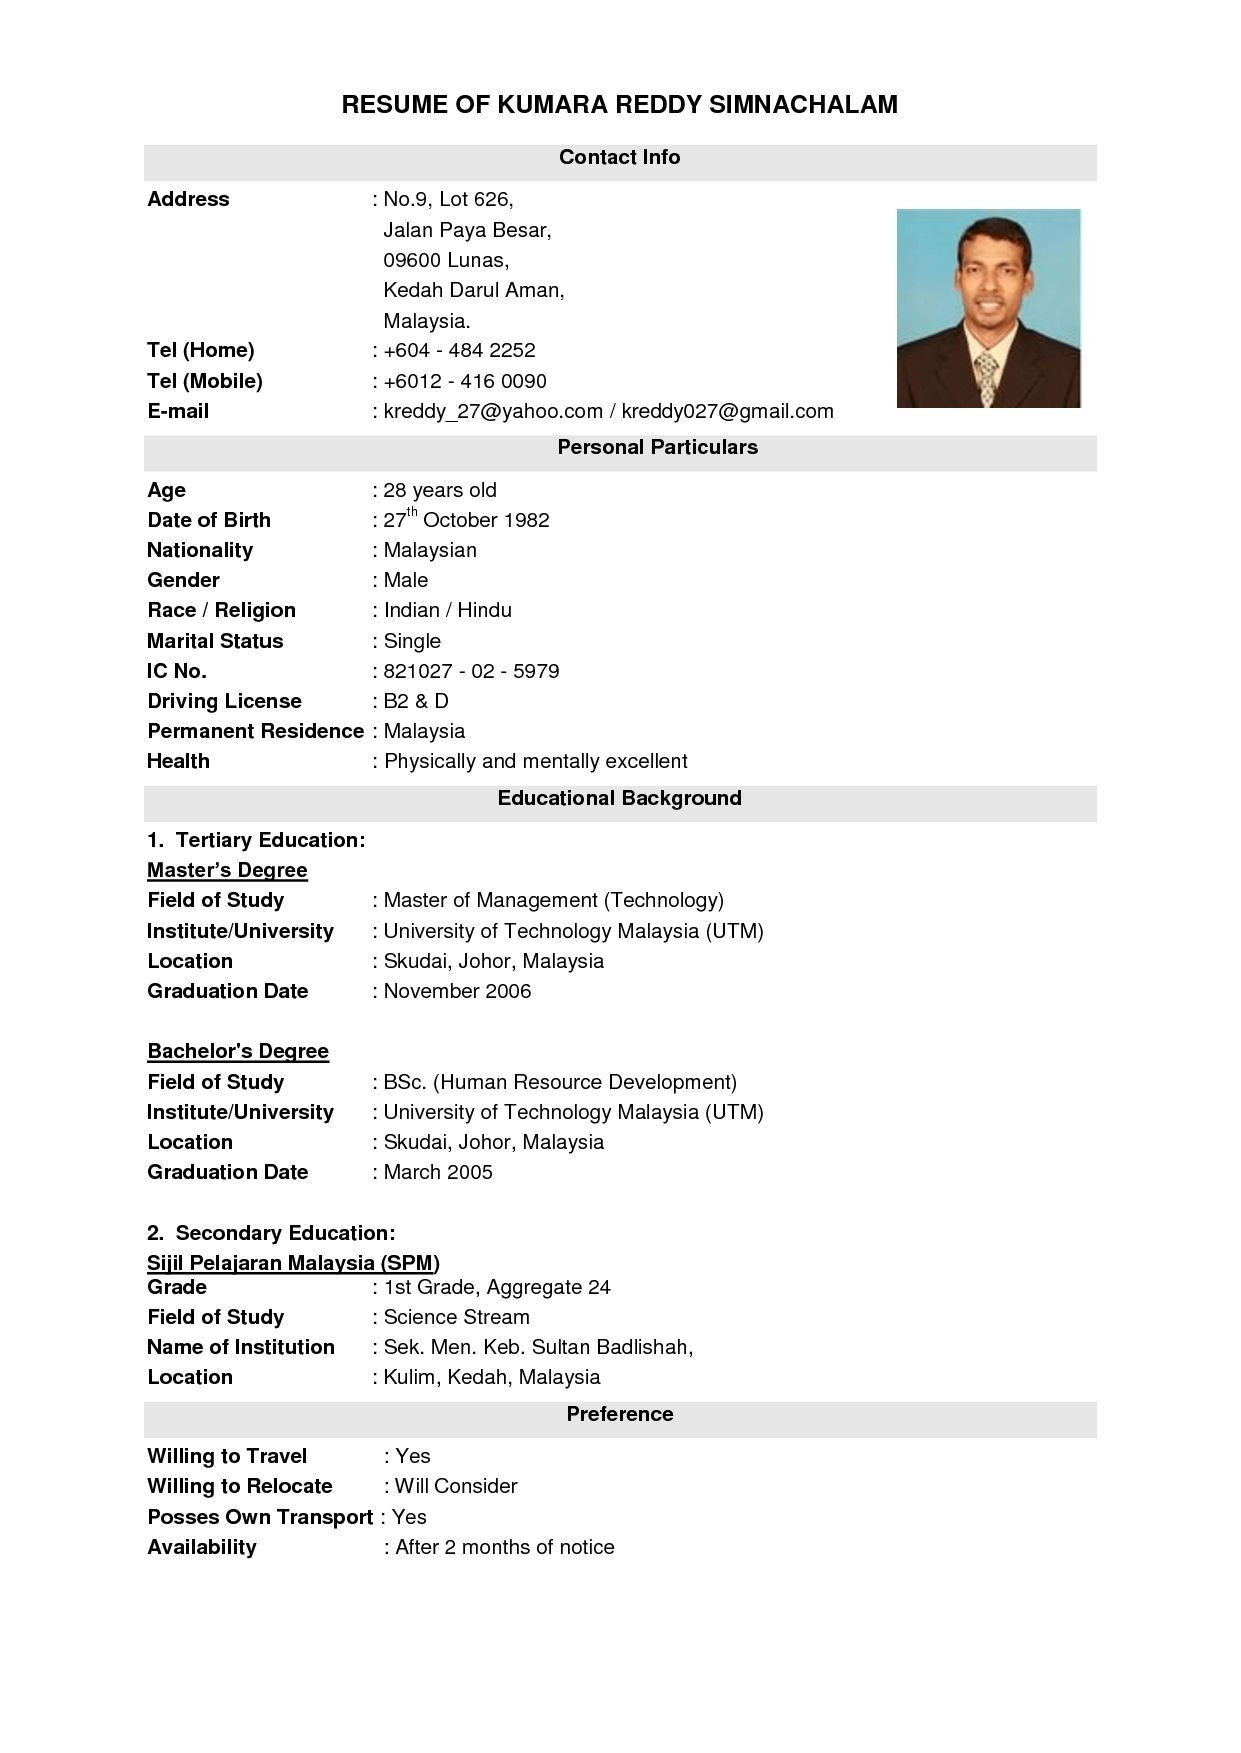 Temple Fox School Of Business Resume Template Resume Templates Jobstreet #jobstreet #resume #resumetemplates …